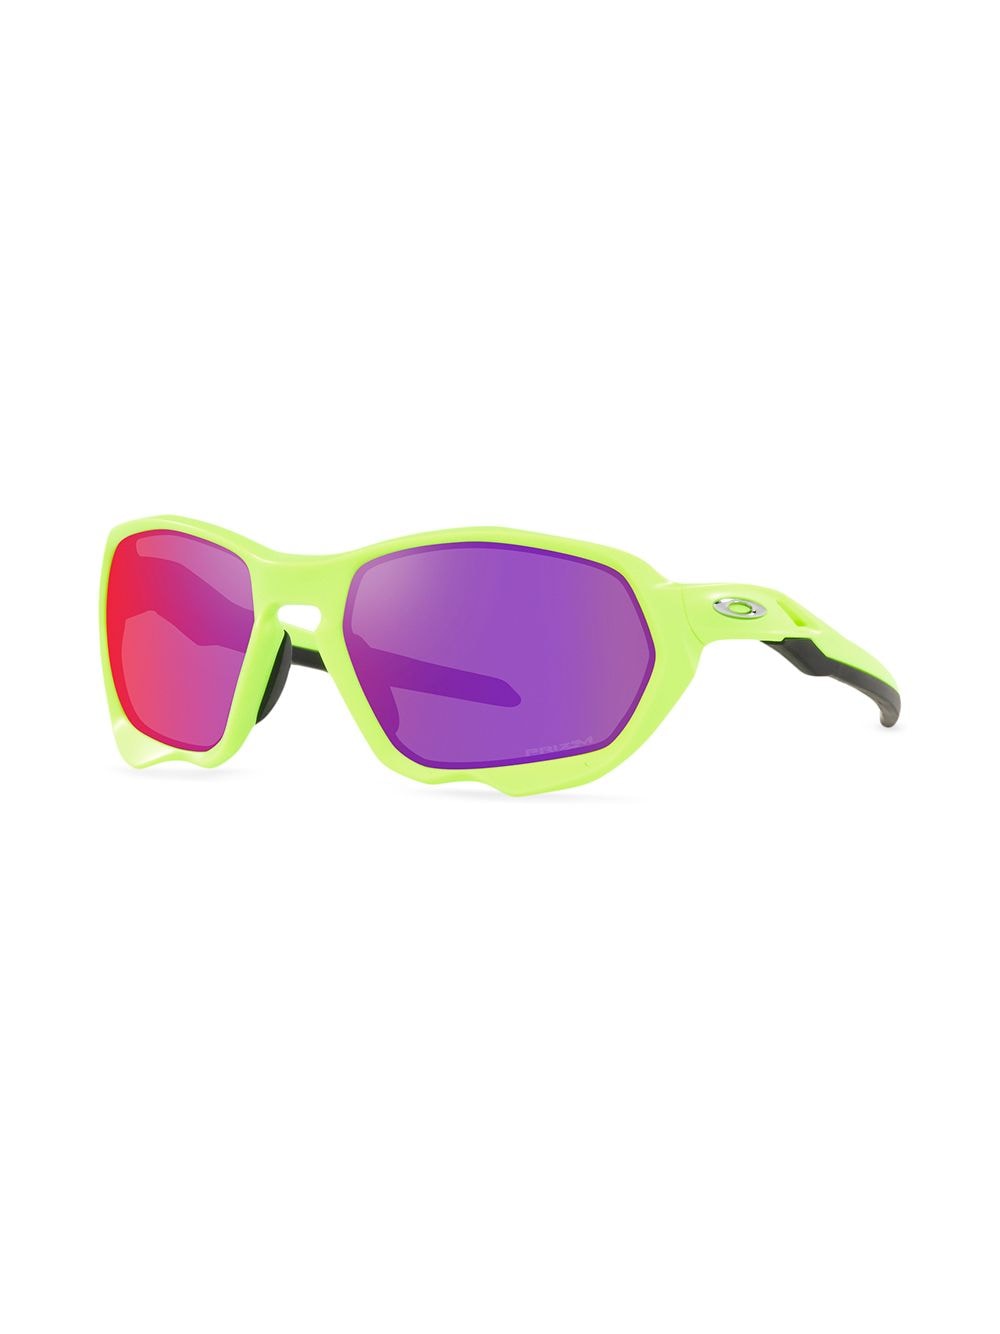 Lime green acetate Plazma tinted sunglasses